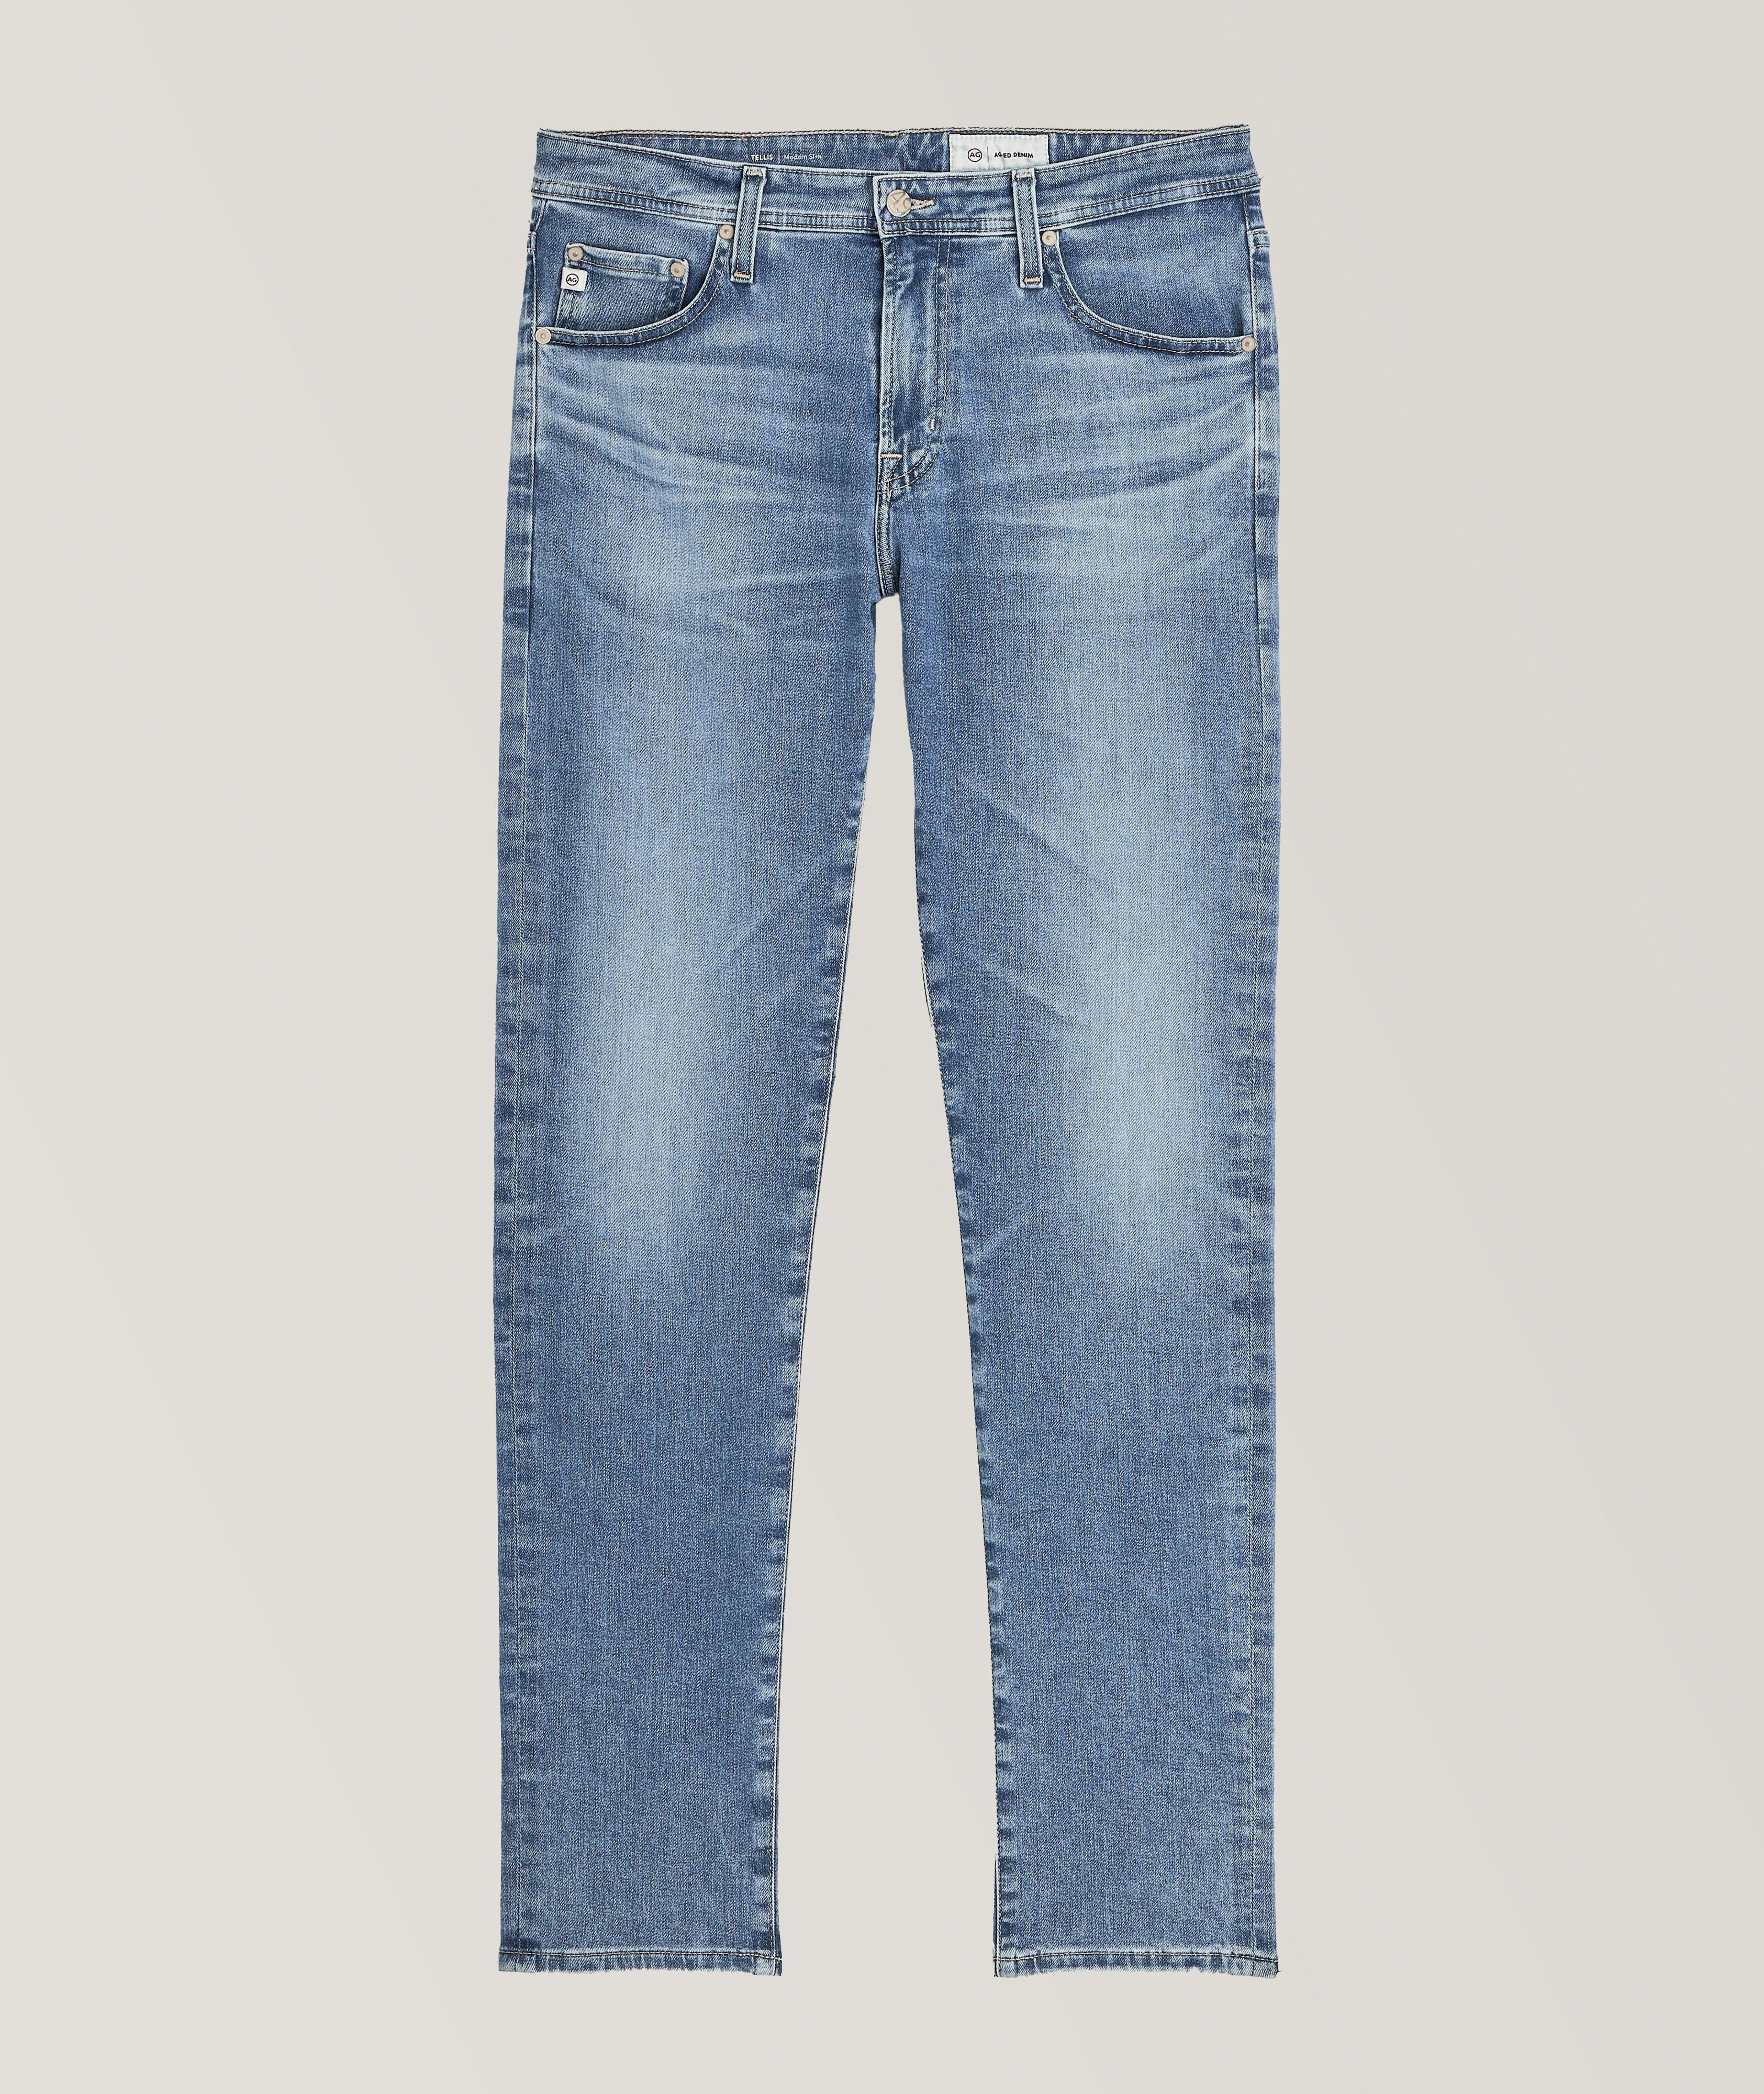 Tellis Vapor Wash Modern Slim Fit Jeans image 0